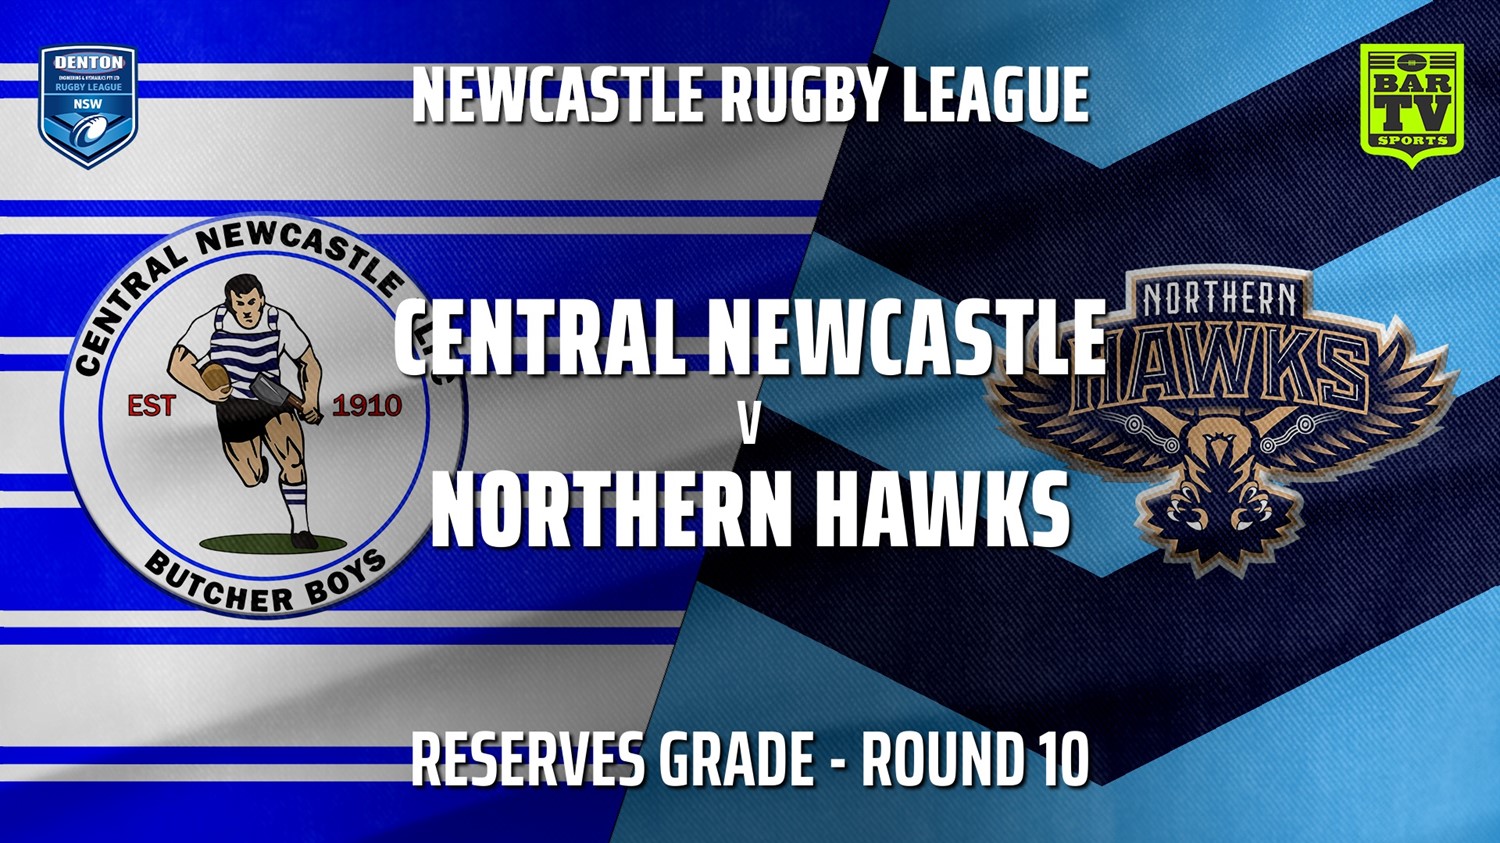 210606-Newcastle Round 10 - Reserves Grade - Central Newcastle v Northern Hawks Slate Image